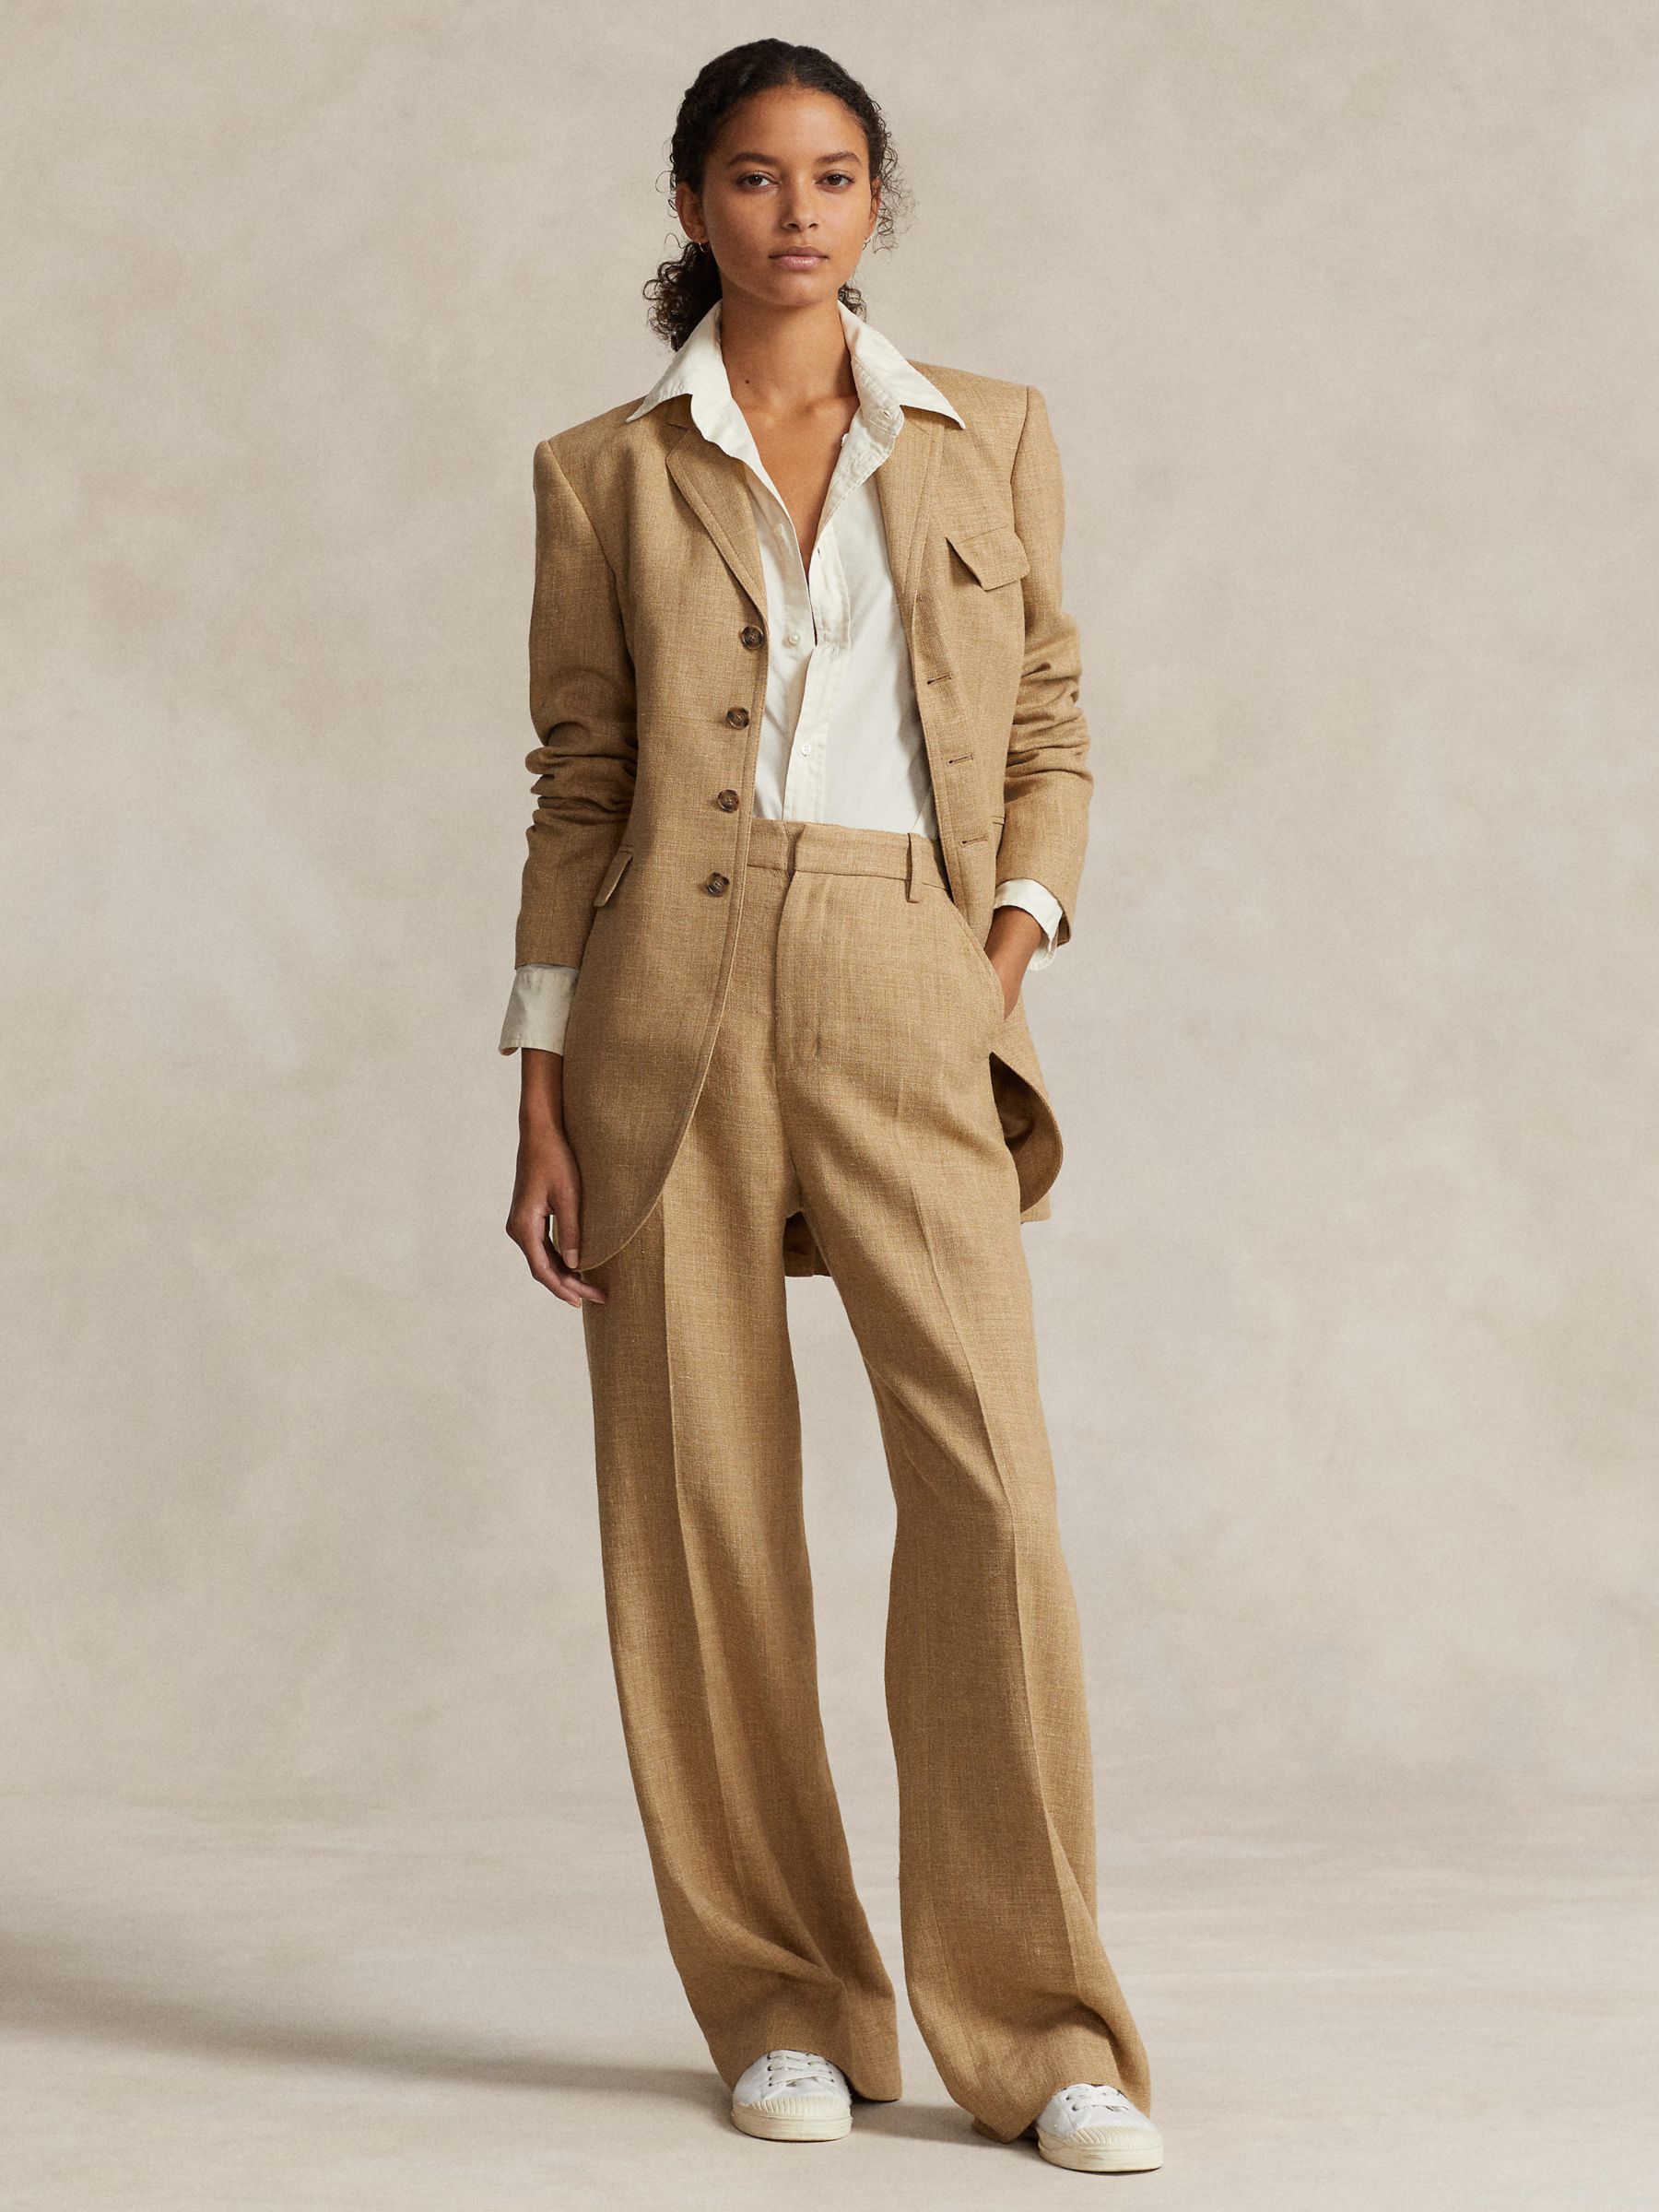 Polo Ralph Lauren Silk Linen Tweed Blazer, Tan, 10